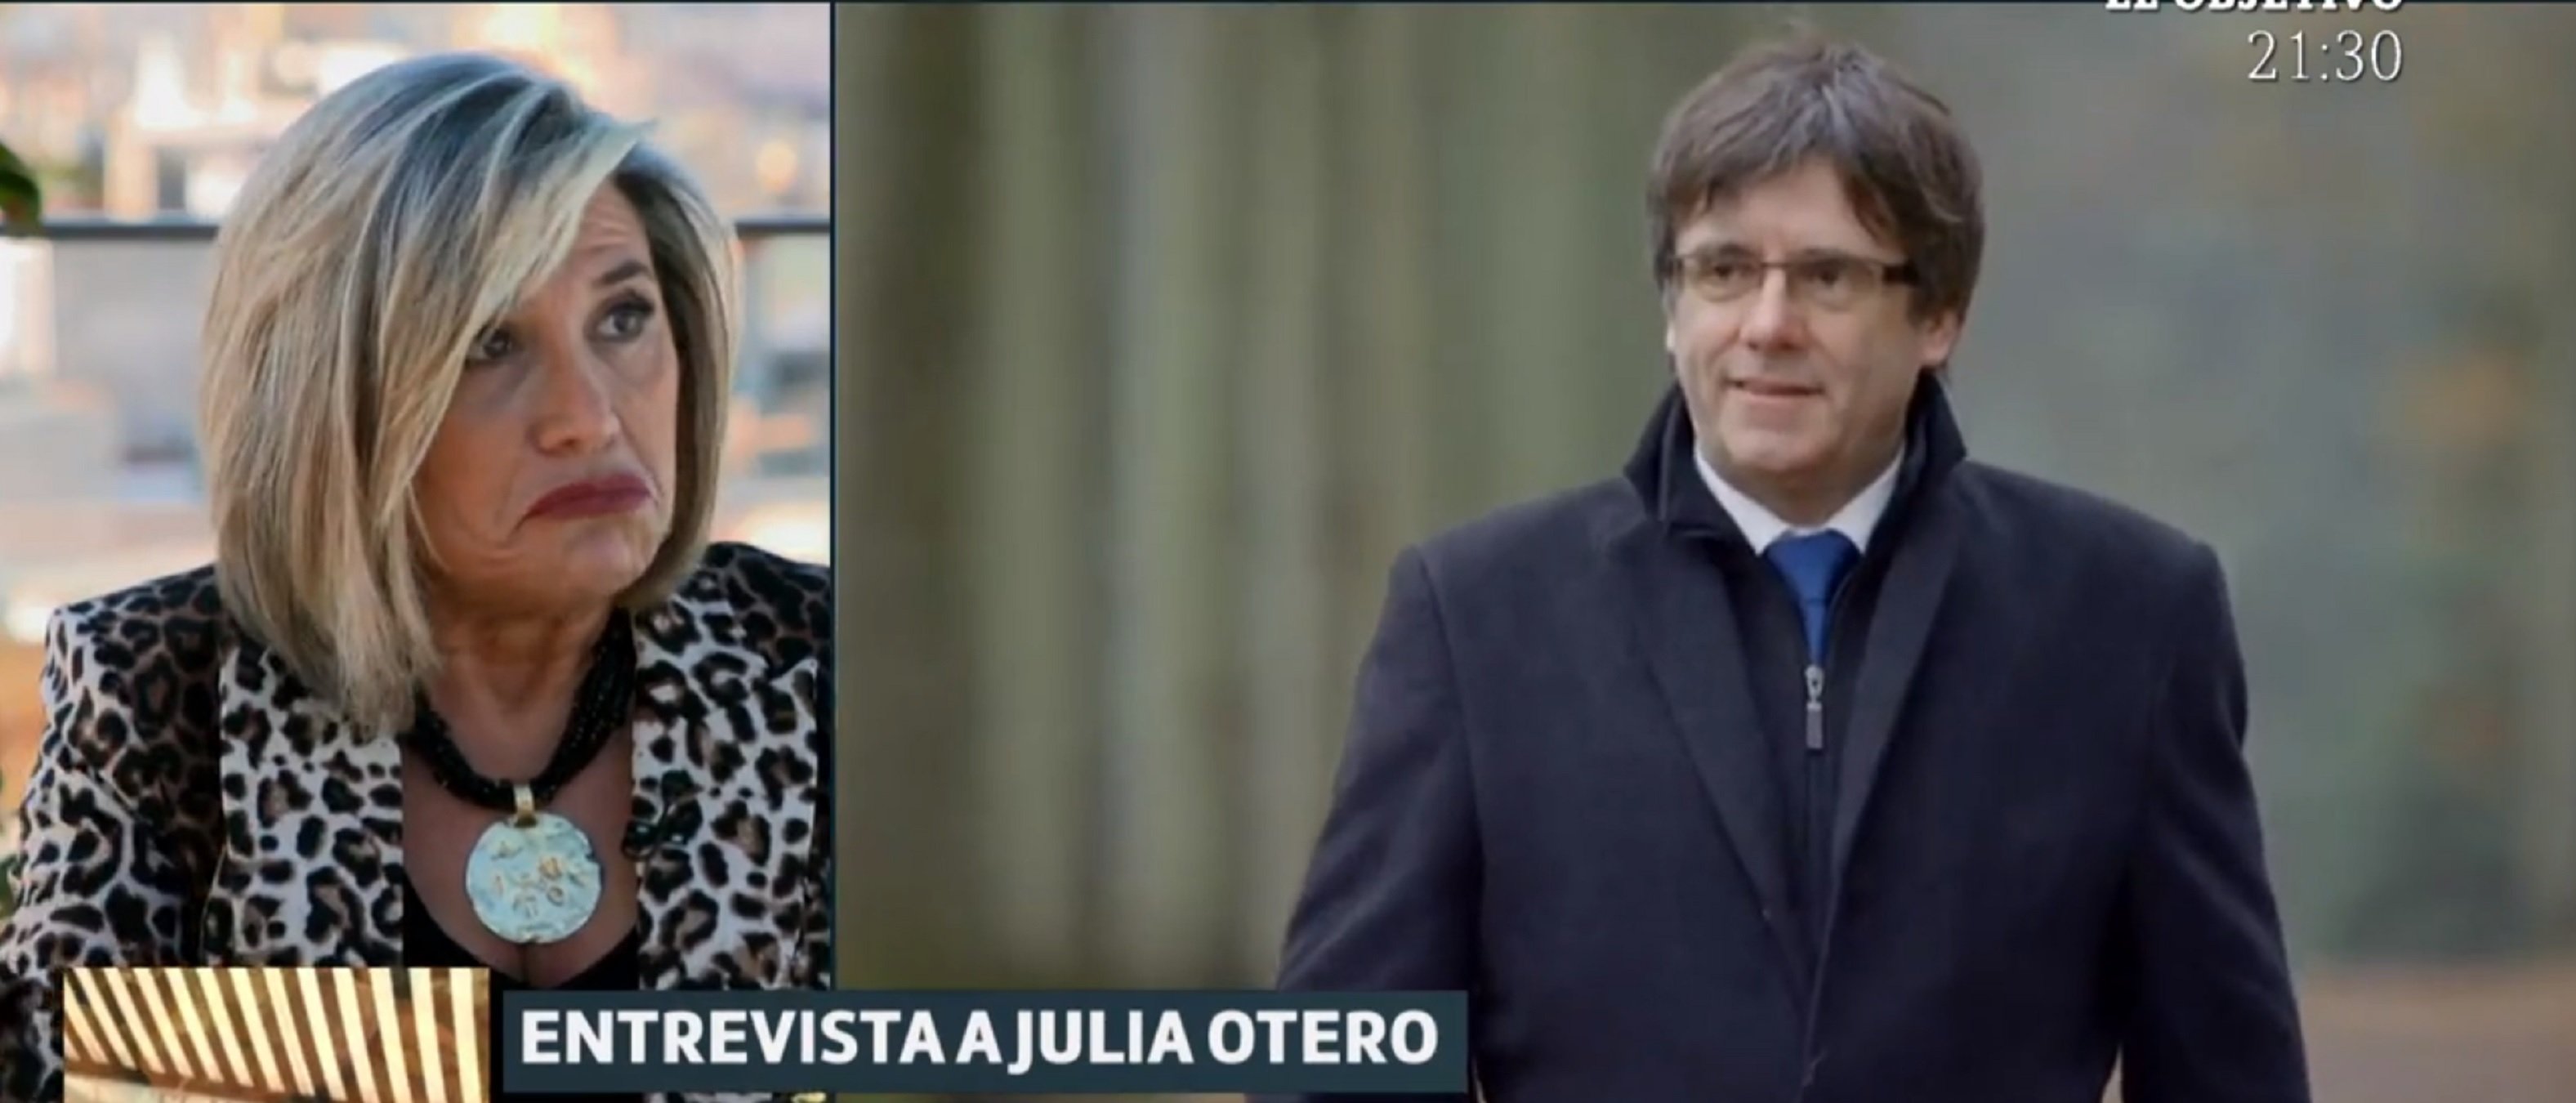 Júlia Otero destrossa Torra: "sense lideratge" i Puigdemont: "un astronauta"